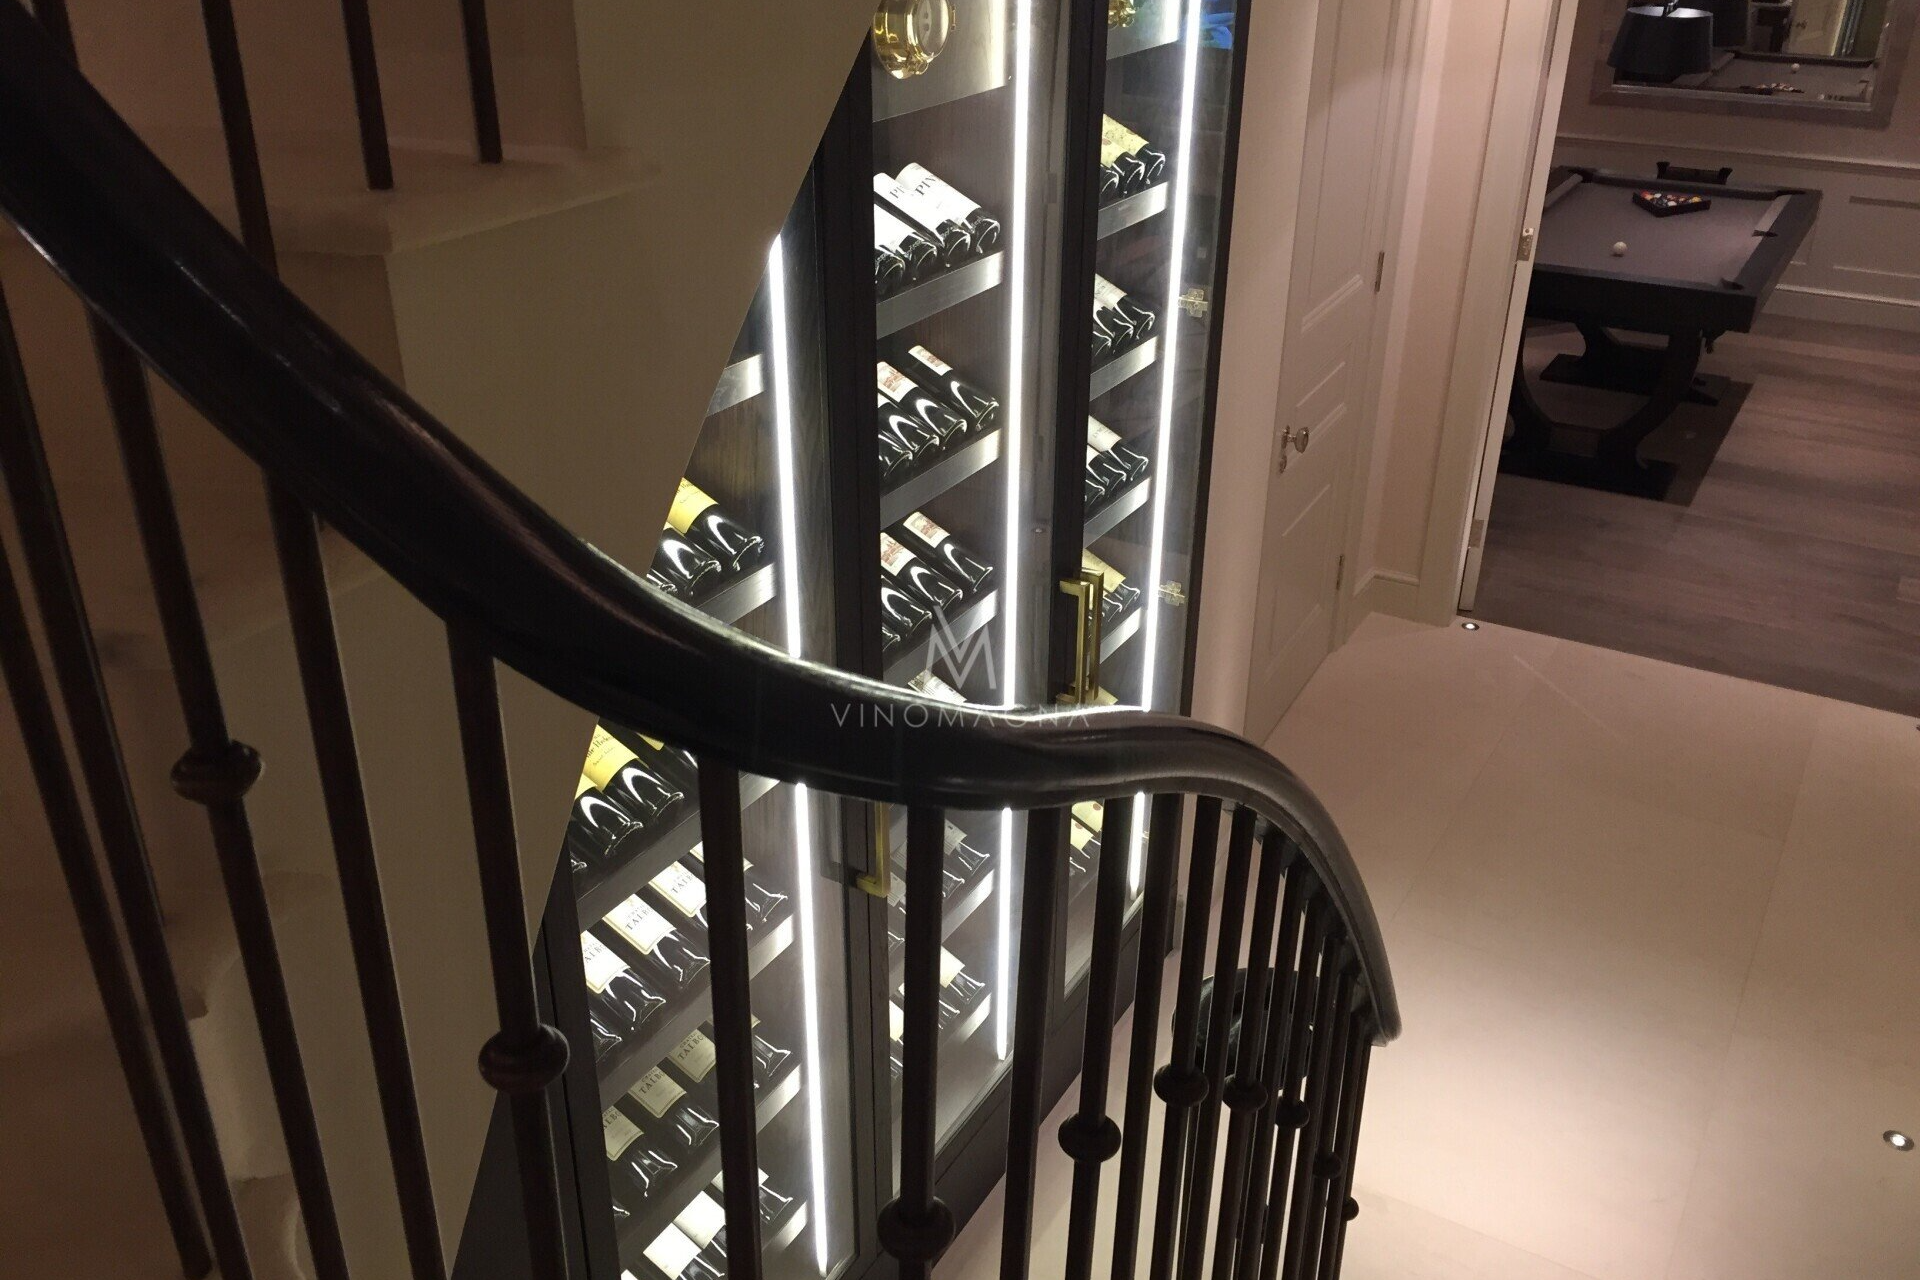 Vinomagna Under stairs custom wine display view from stairs